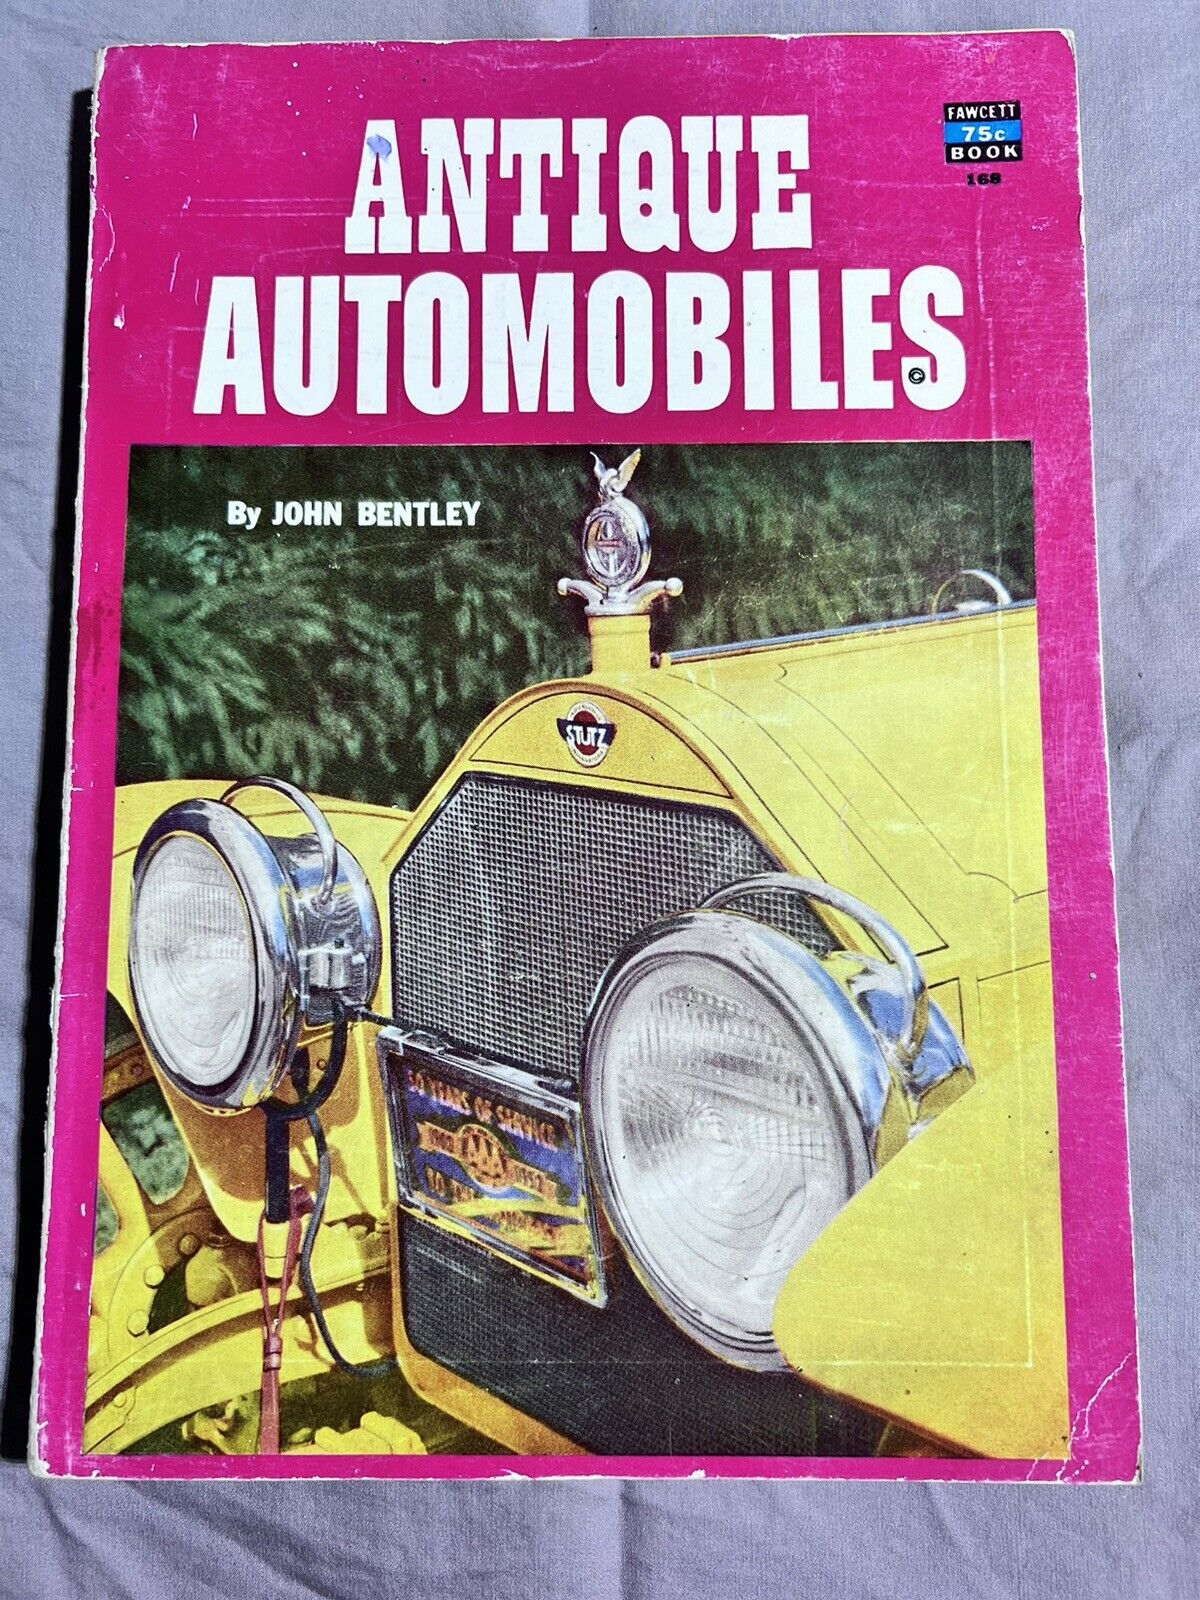 Antique Automobiles by John Bentley